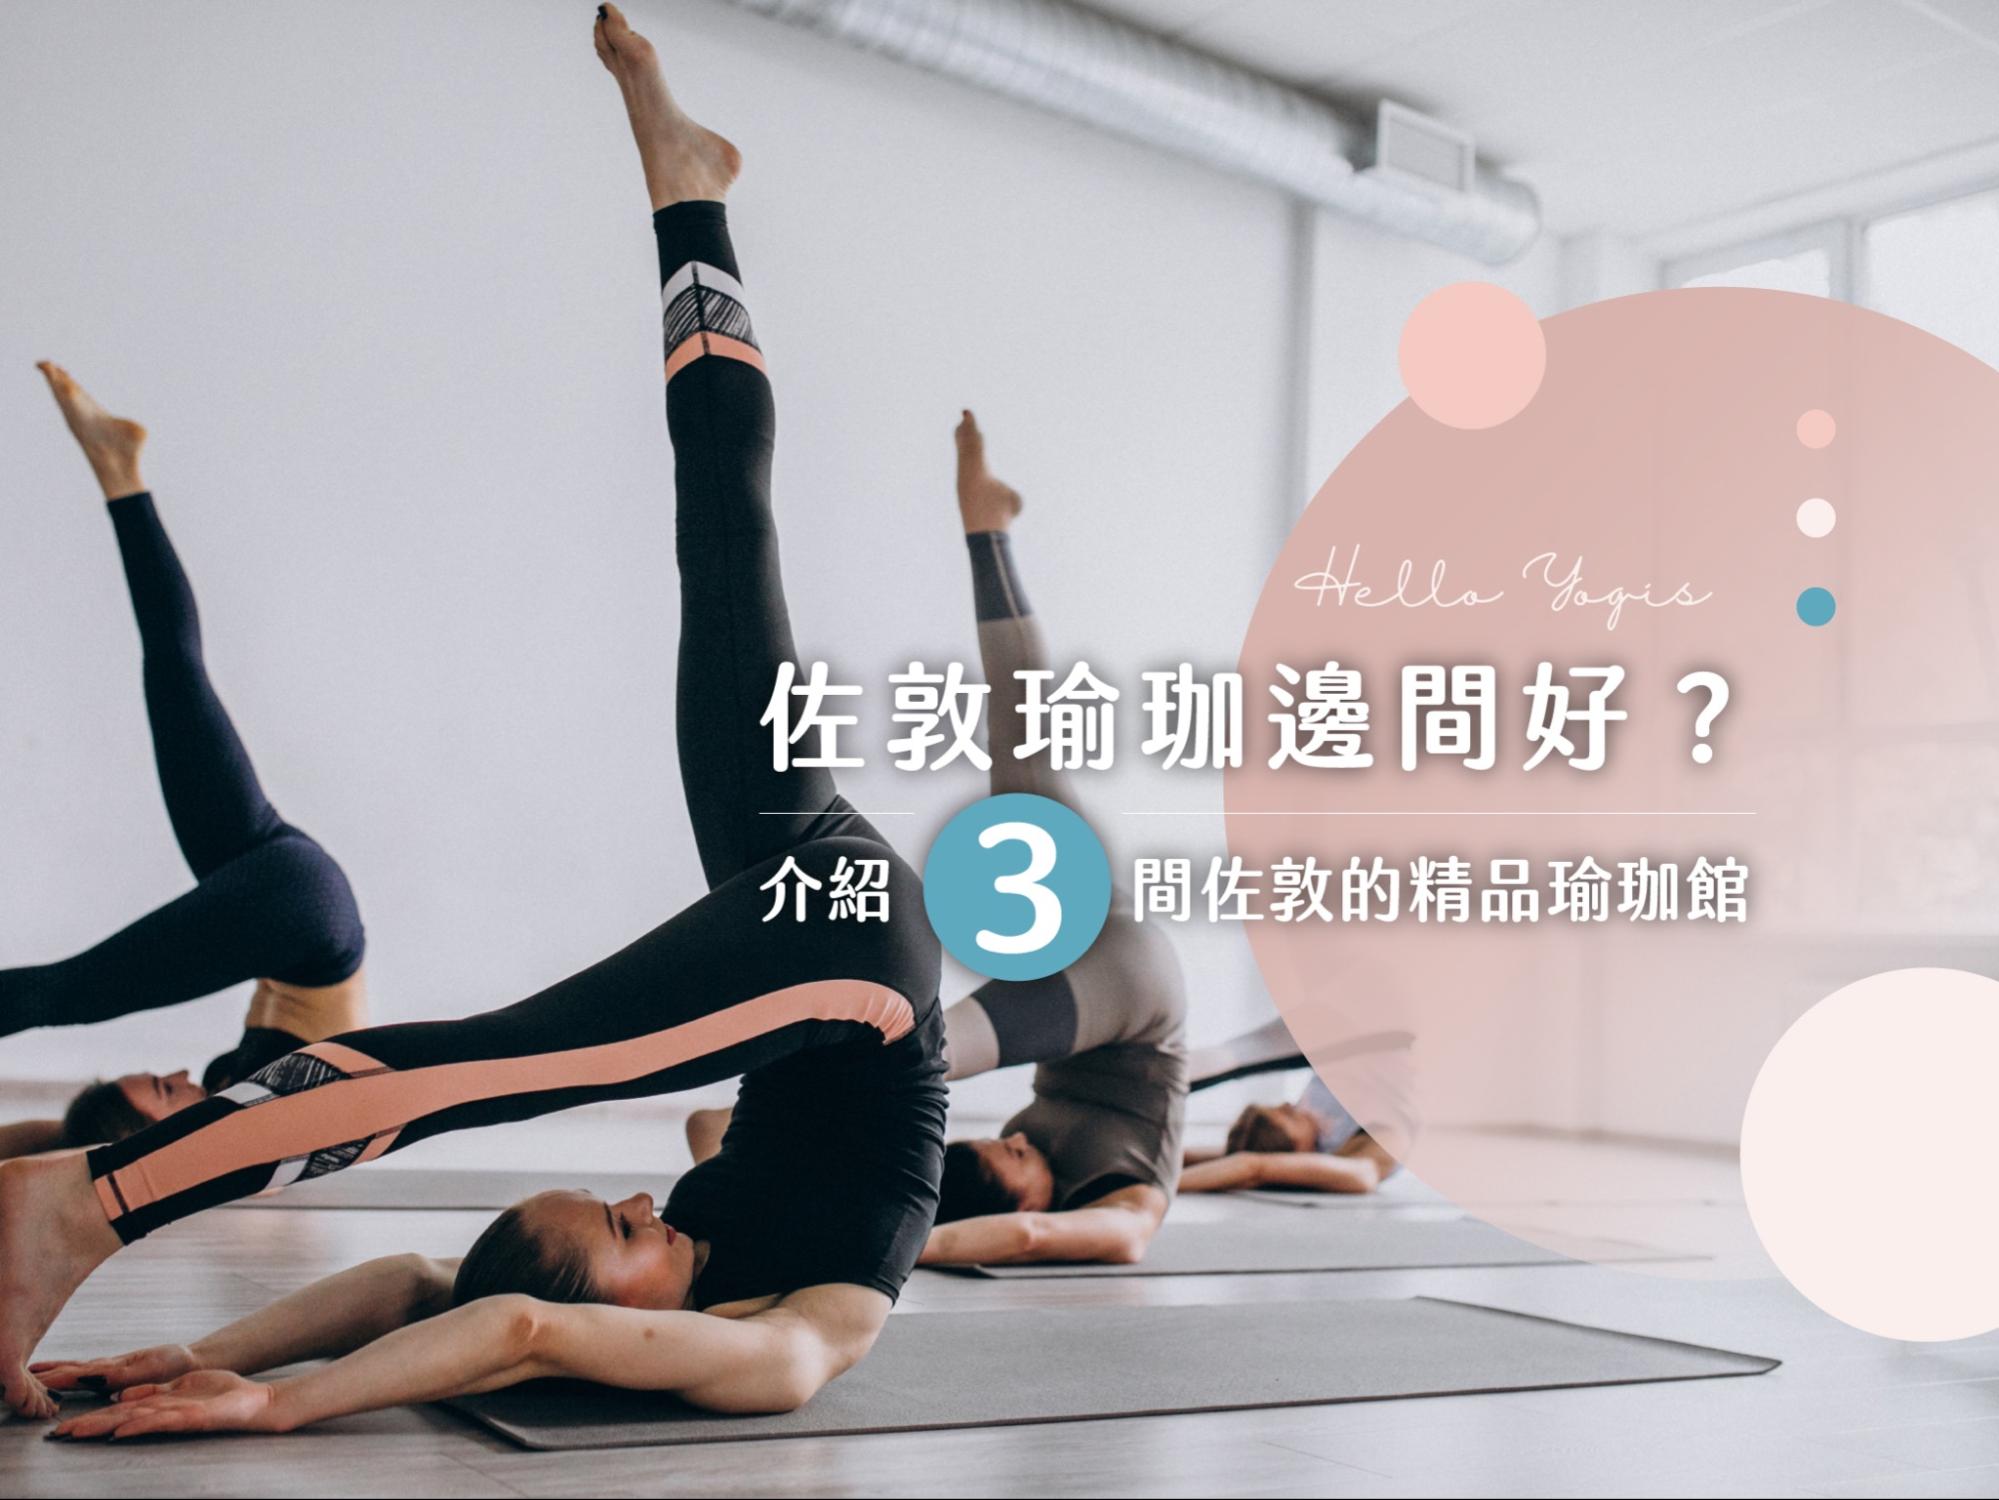 image3 1 佐敦瑜珈, 佐敦瑜珈邊間好, 佐敦yoga studio, Sevayoga Studio, Inhale Yoga Studio, Mantra Yoga HK